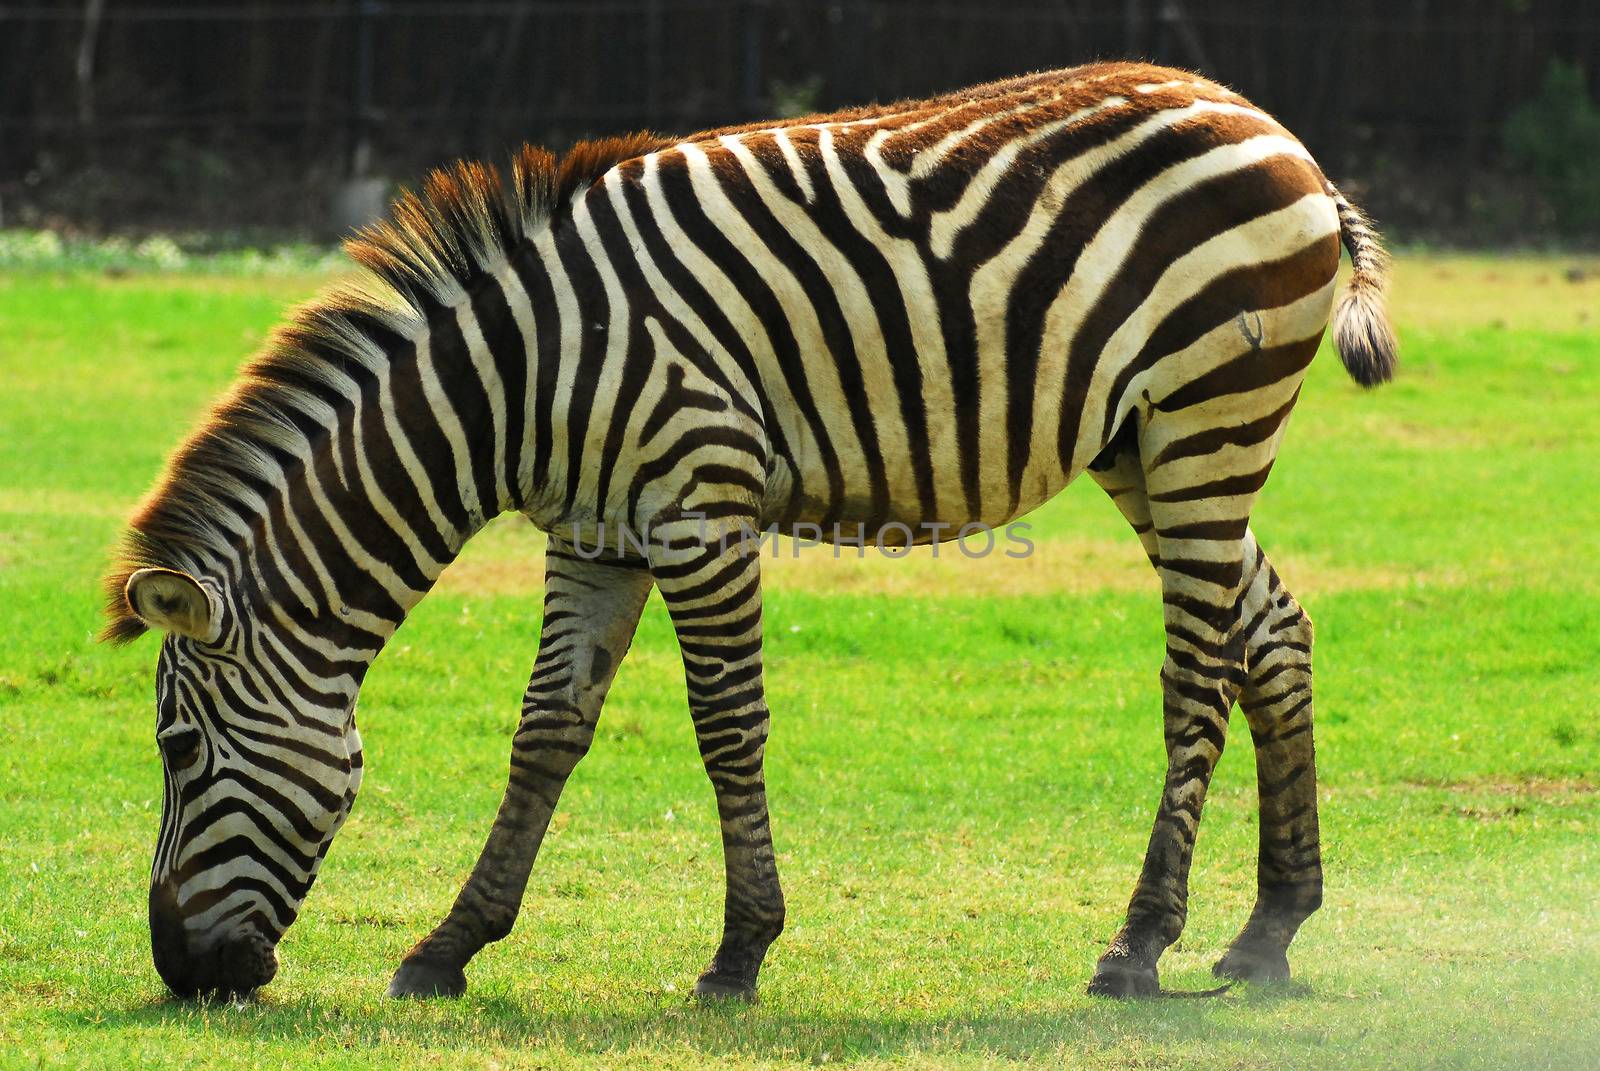 Zebra grazing in a green field